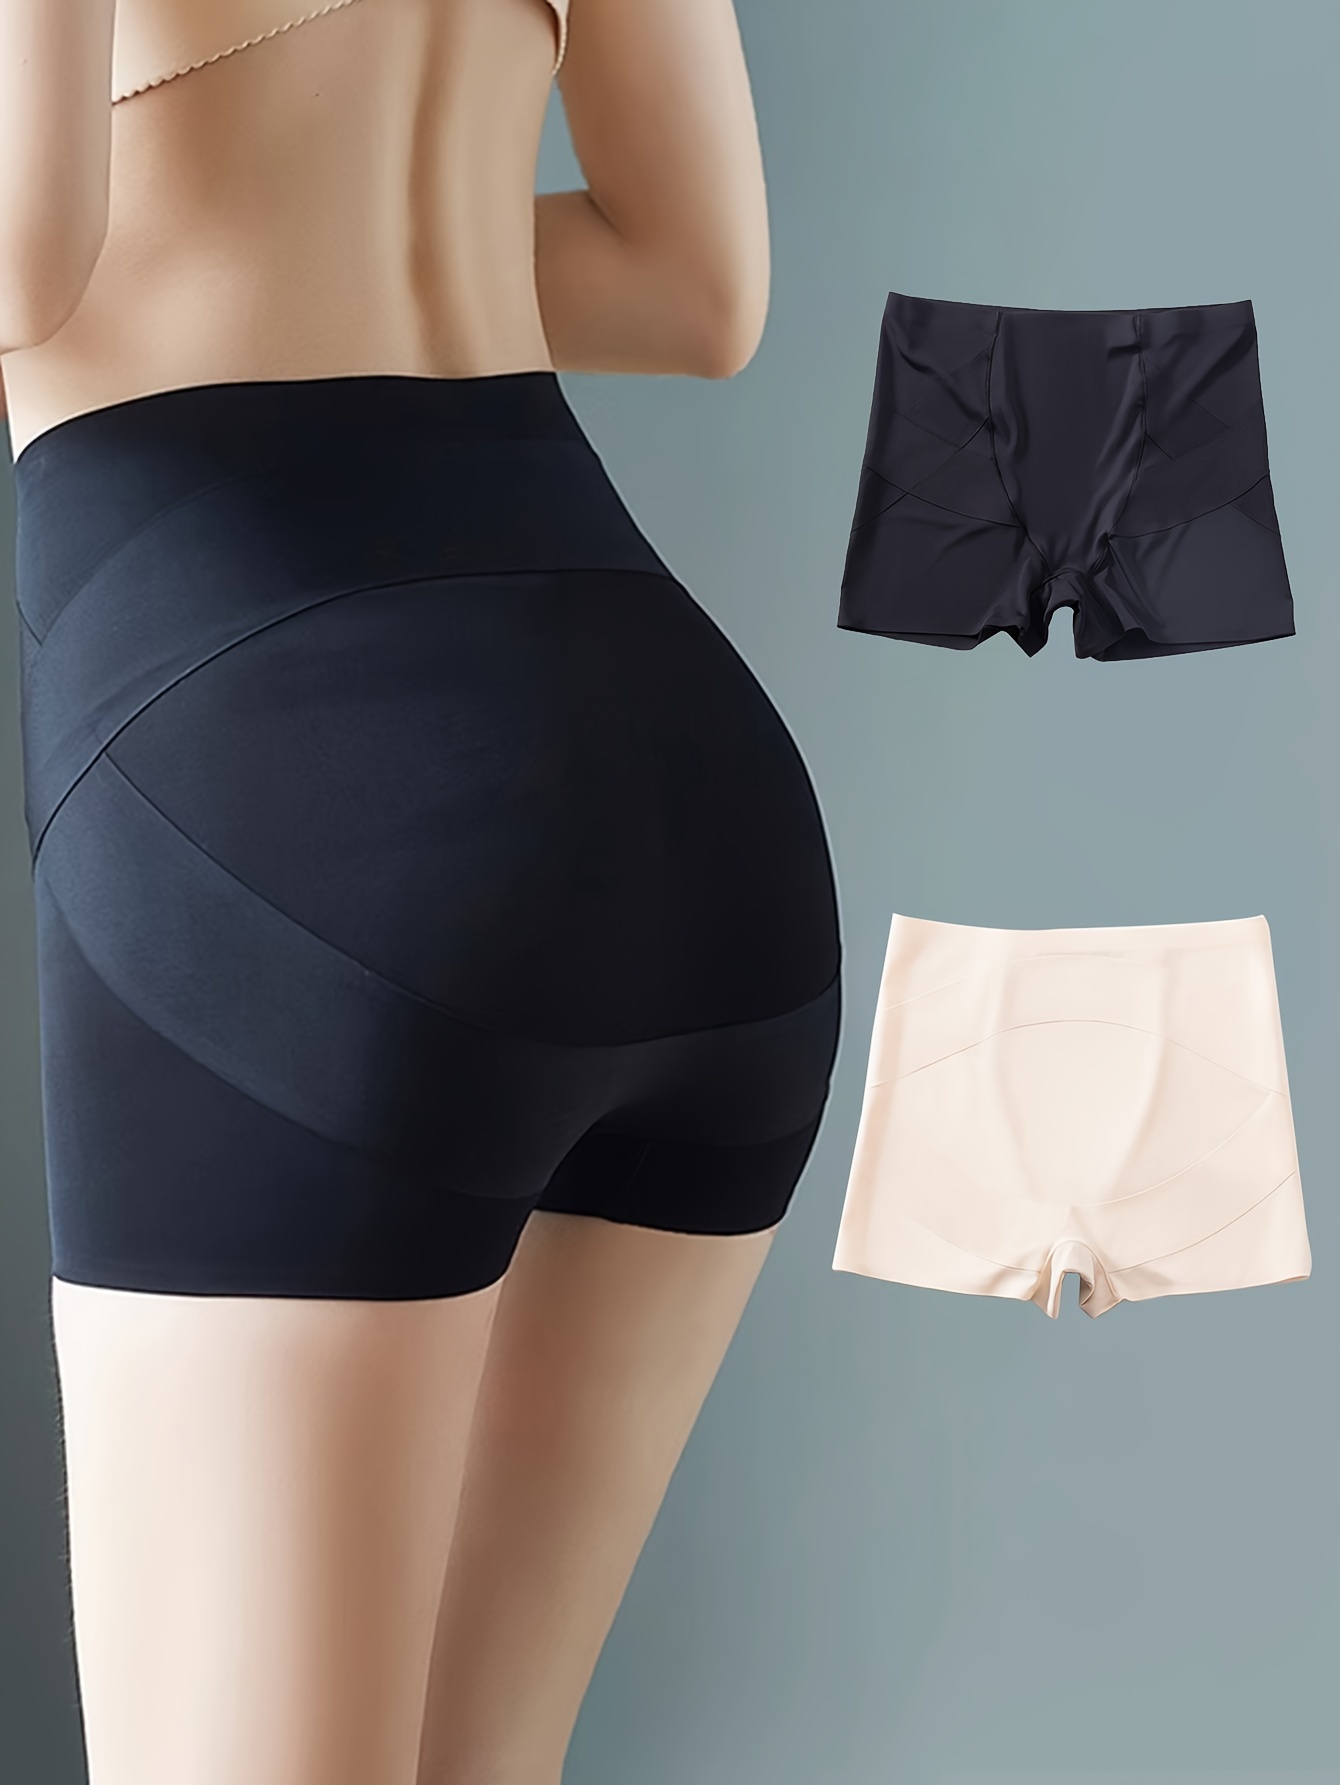 Flarixa High Waist Flat Belly Panties Seamless Woman Boxer Body Slimming  Shaping Pants Push Up Underwear Thin Safety Shorts